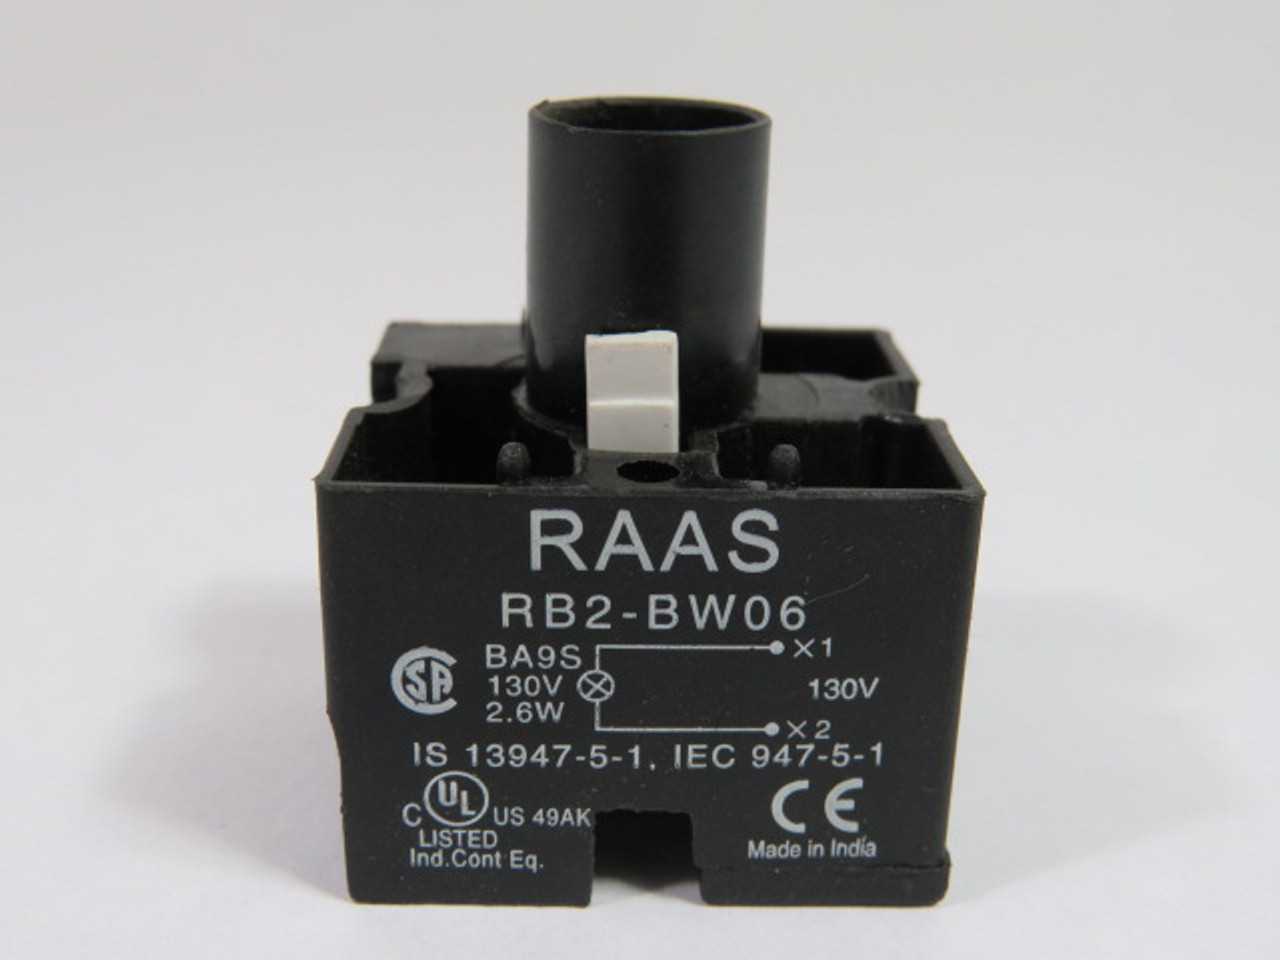 RAAS RB2-BW06 Lamp Module 2.6W 130V USED